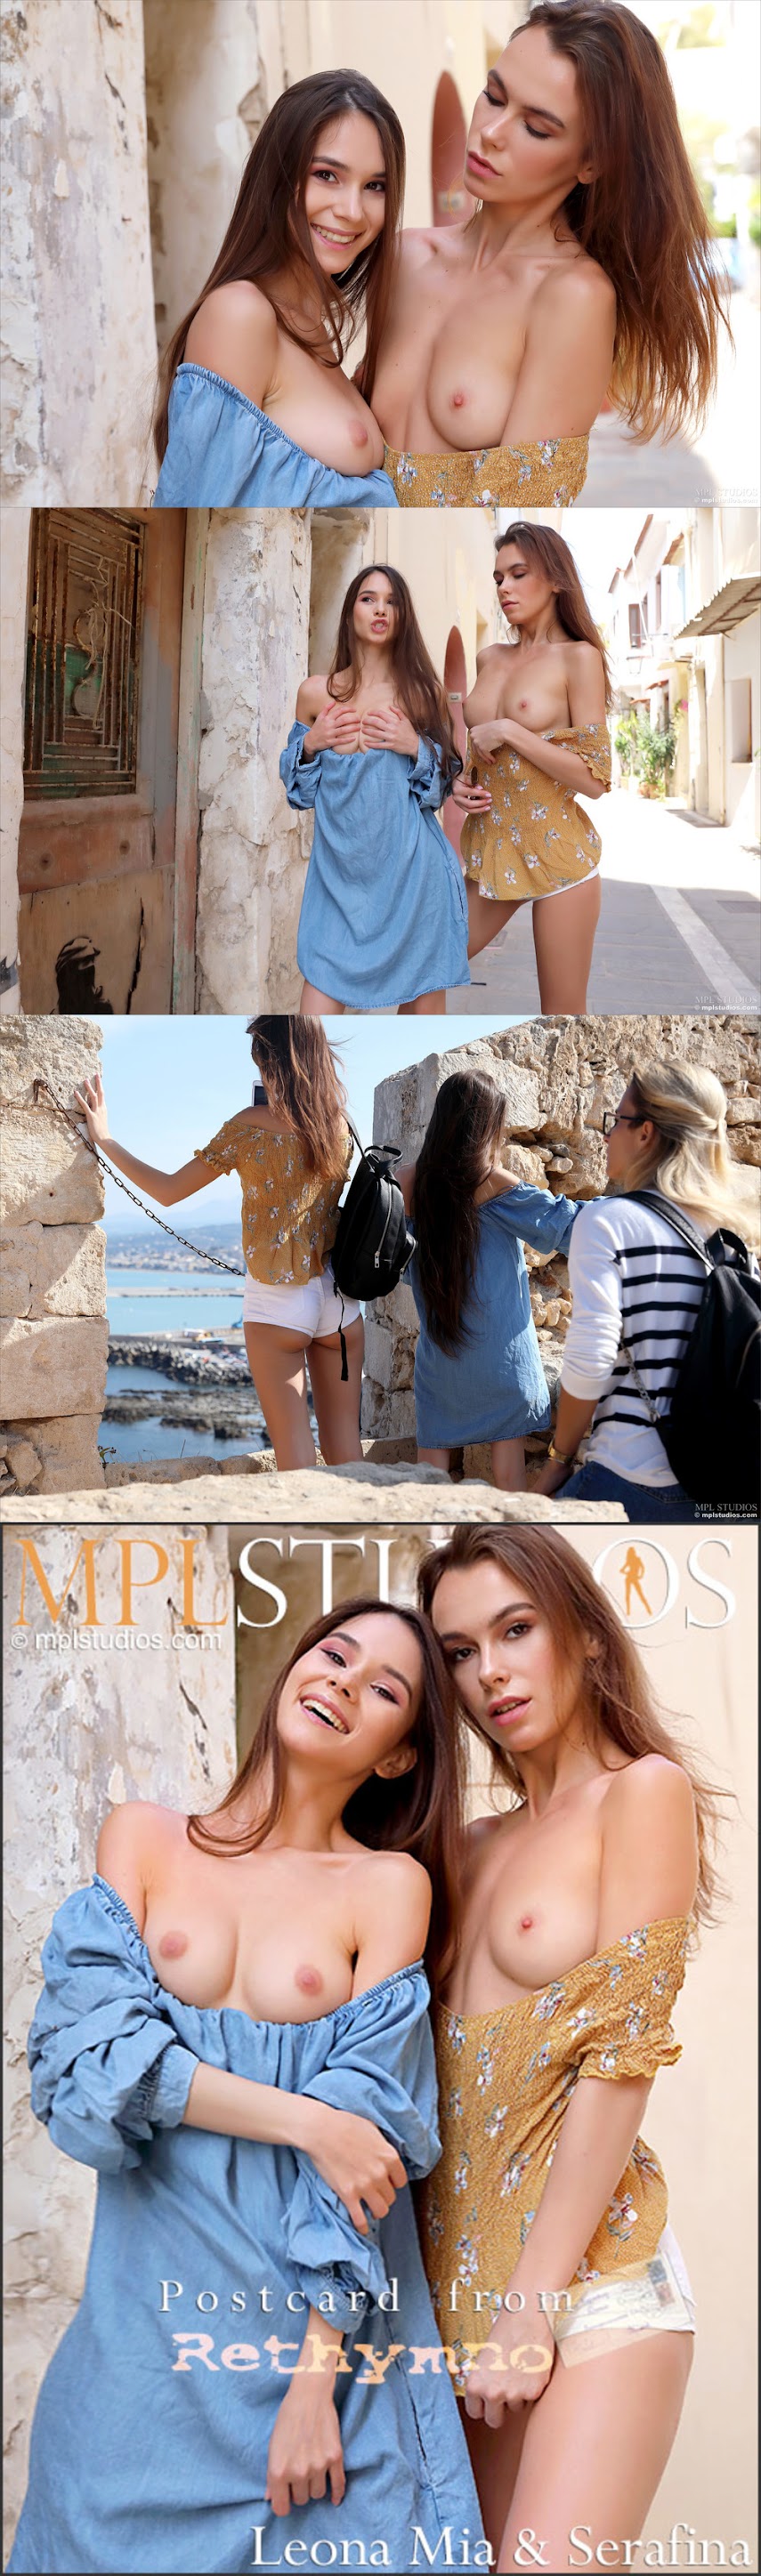 MPLS 2020-09-27 - Postcard From Rethymno - Serafina Leona Mia  47 2668x4000